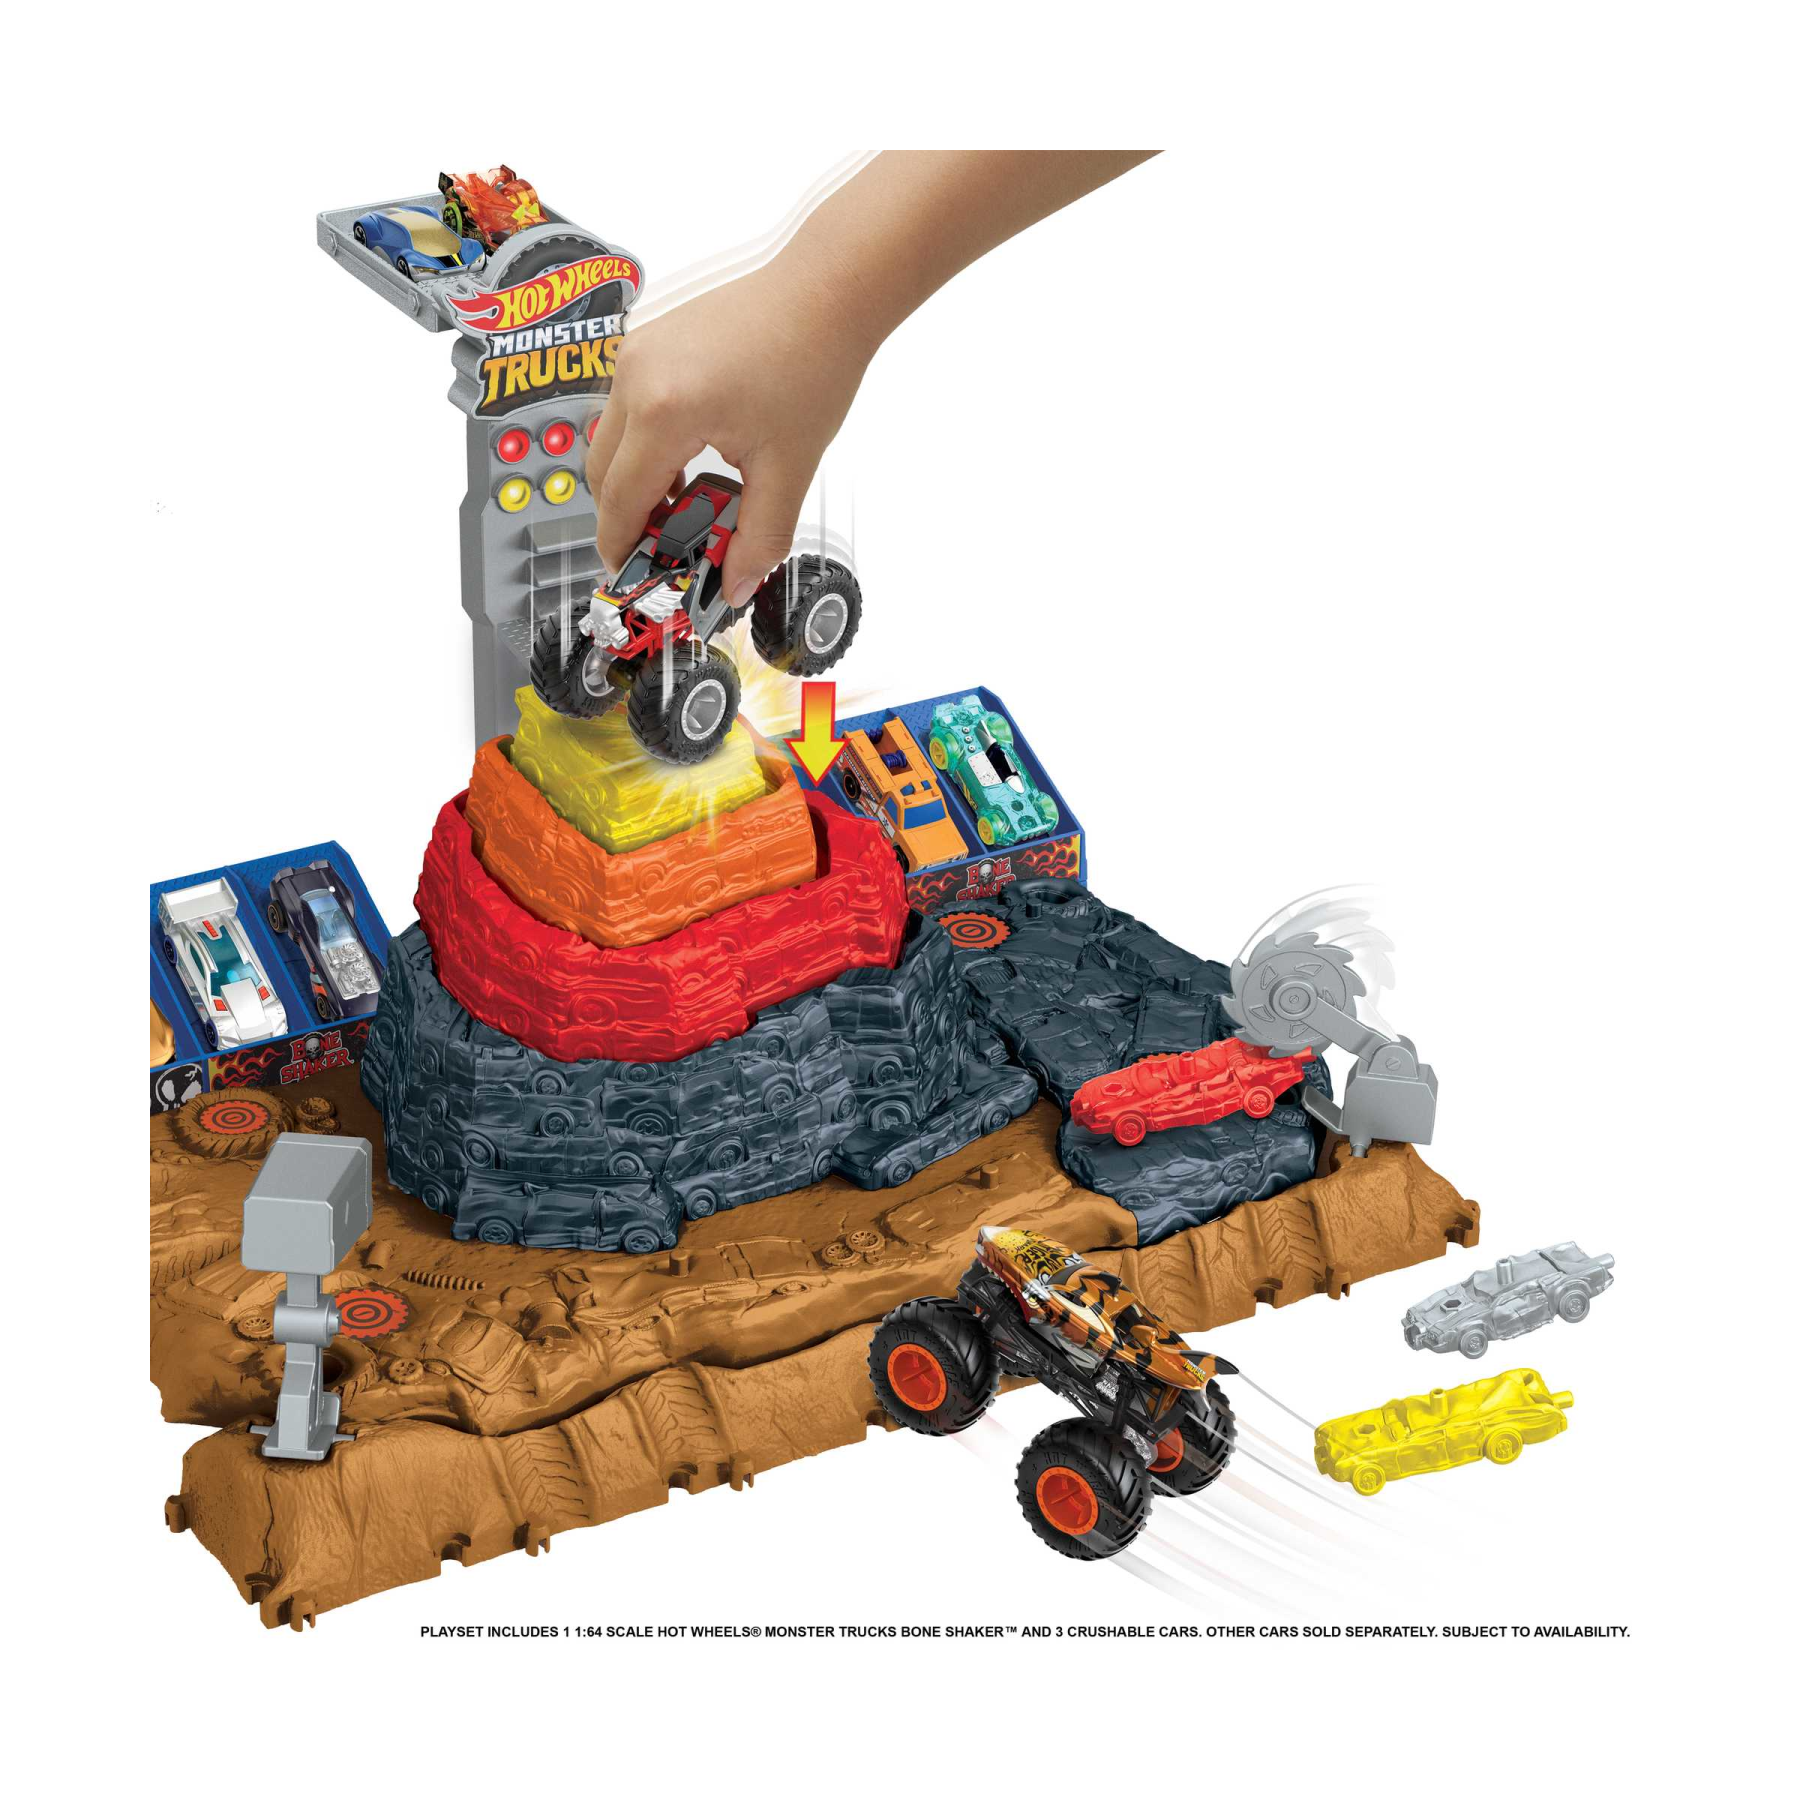 Hot wheels monster trucks - arena degli scontri bone shaker sfida demolizione, playset che include 1 monster truck bone shaker e 3 auto da demolire, giocattolo per bambini, 4+ anni, hnb96 - Hot Wheels